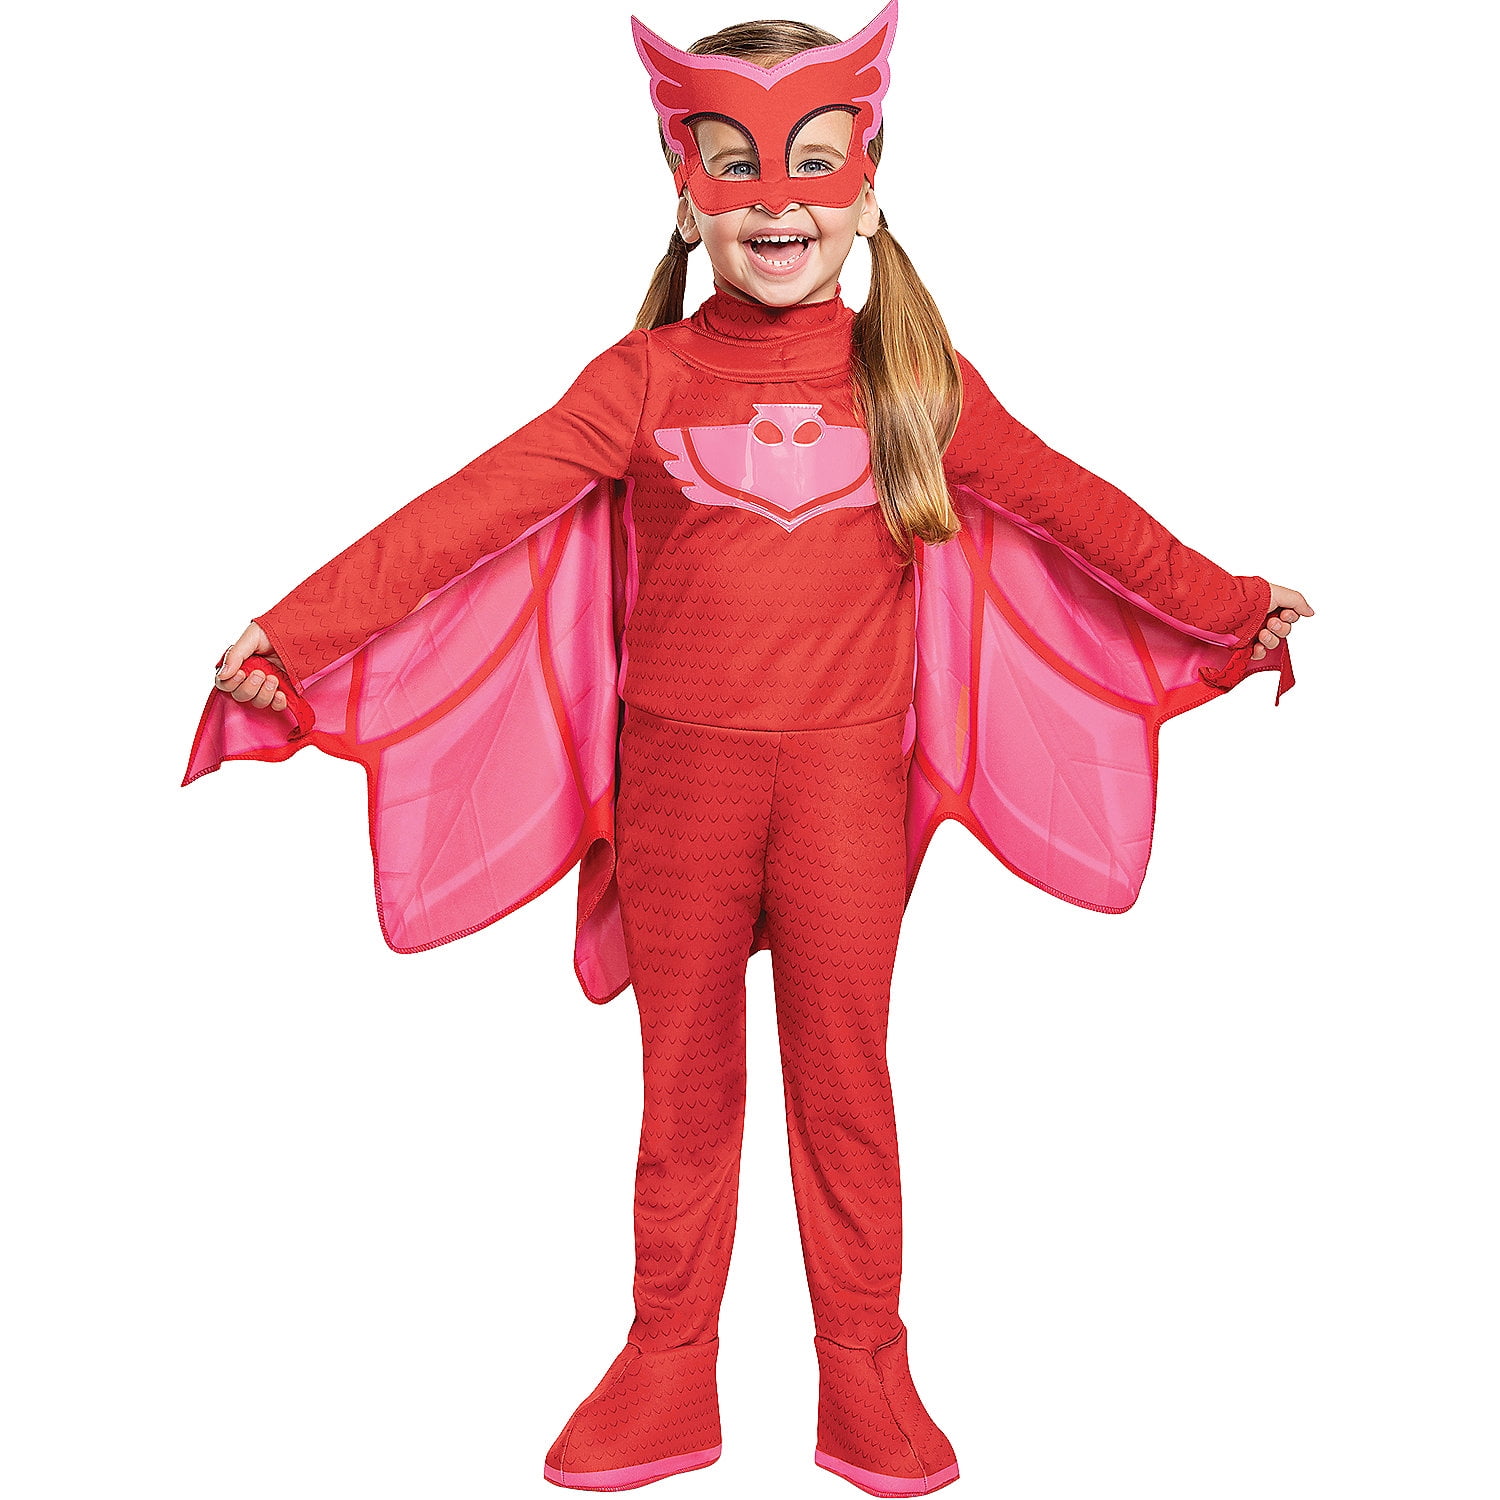 PJ Masks Family Costume - Make Owlette, Catboy masks and more!